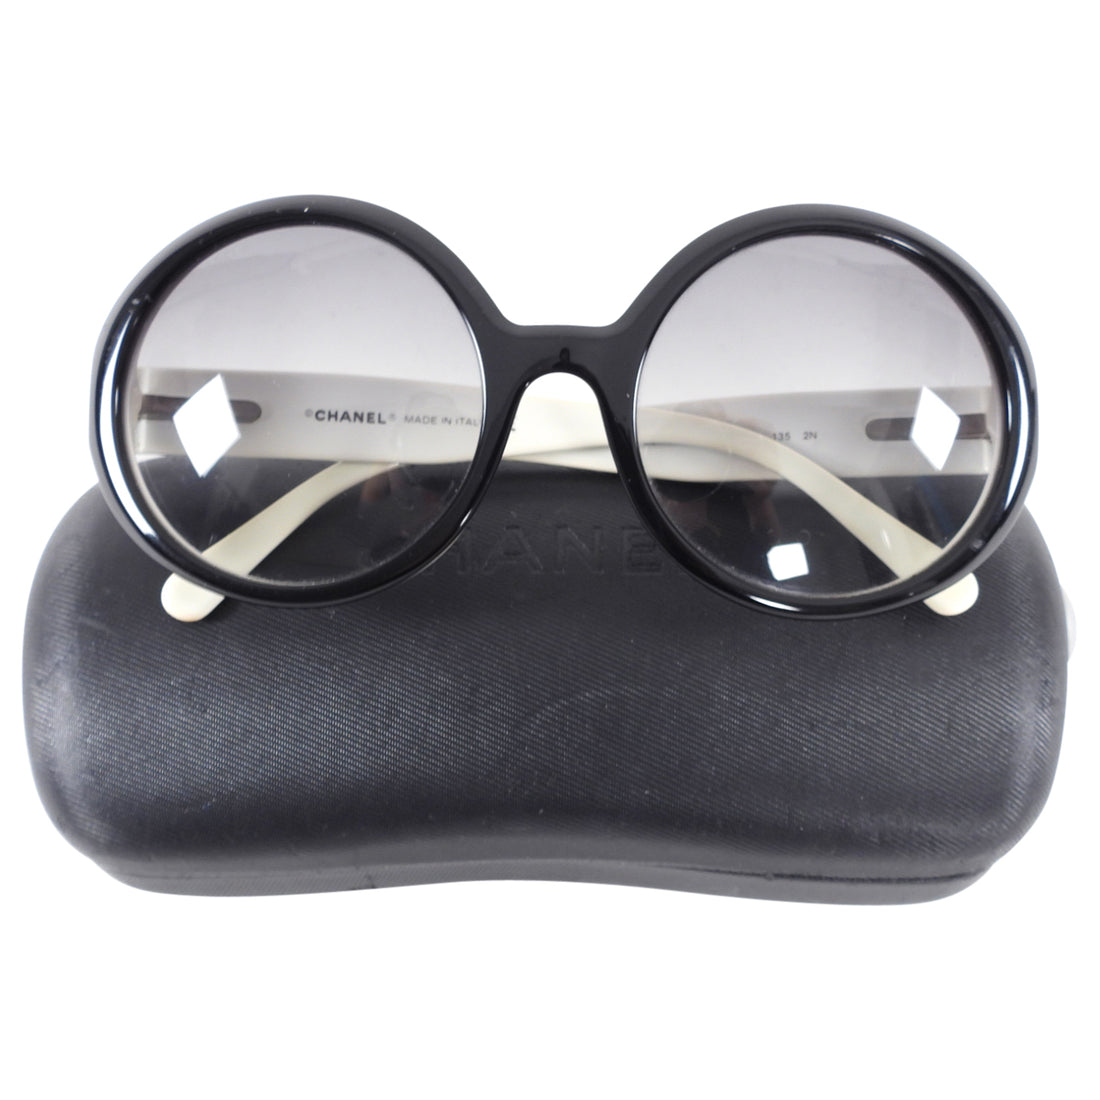 Crosby Street - NYS Collection Eyewear